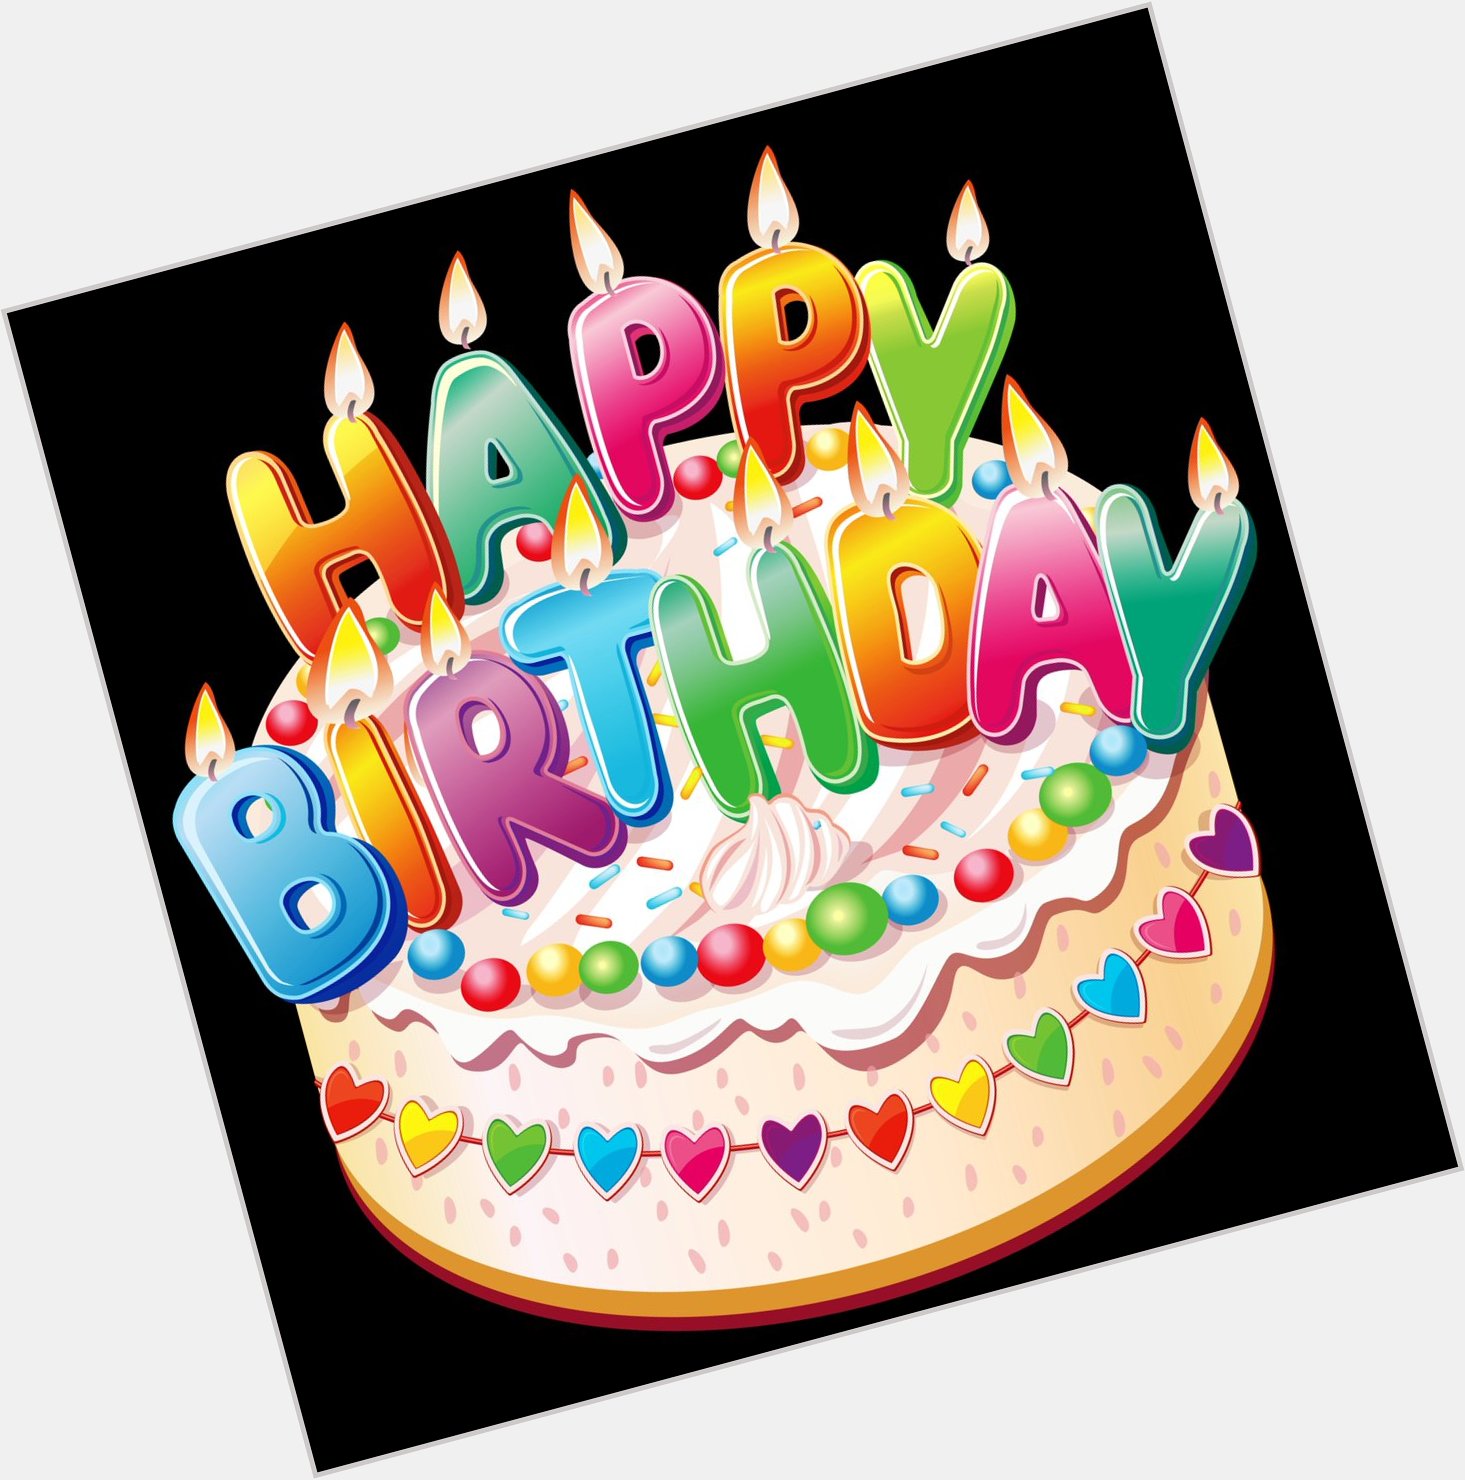 Wishing my friend Frank Ashmore a Very Happy Birthday!!!! 